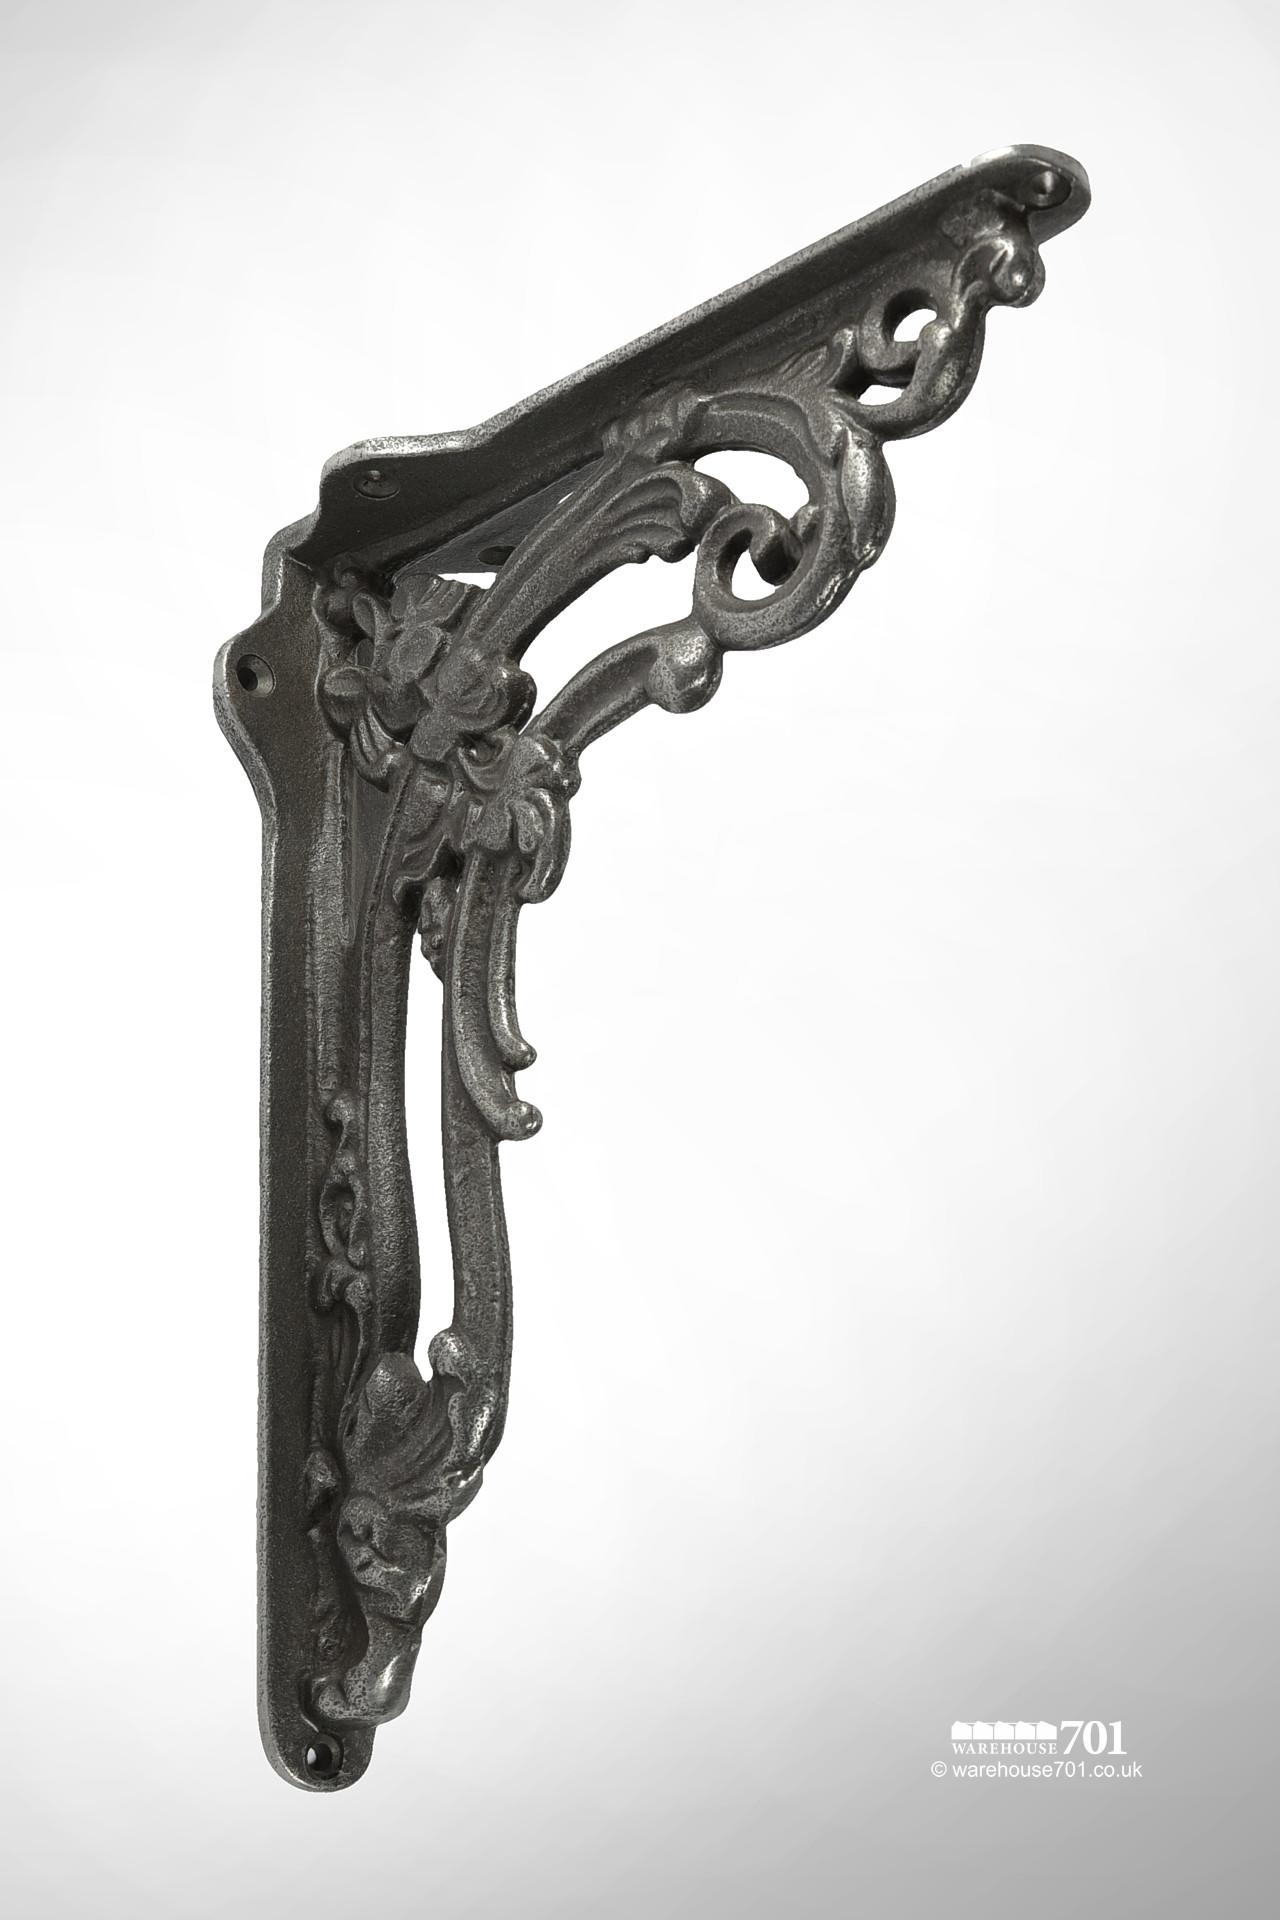 New Cast Iron Shelf Bracket with a Victorian Flower Design